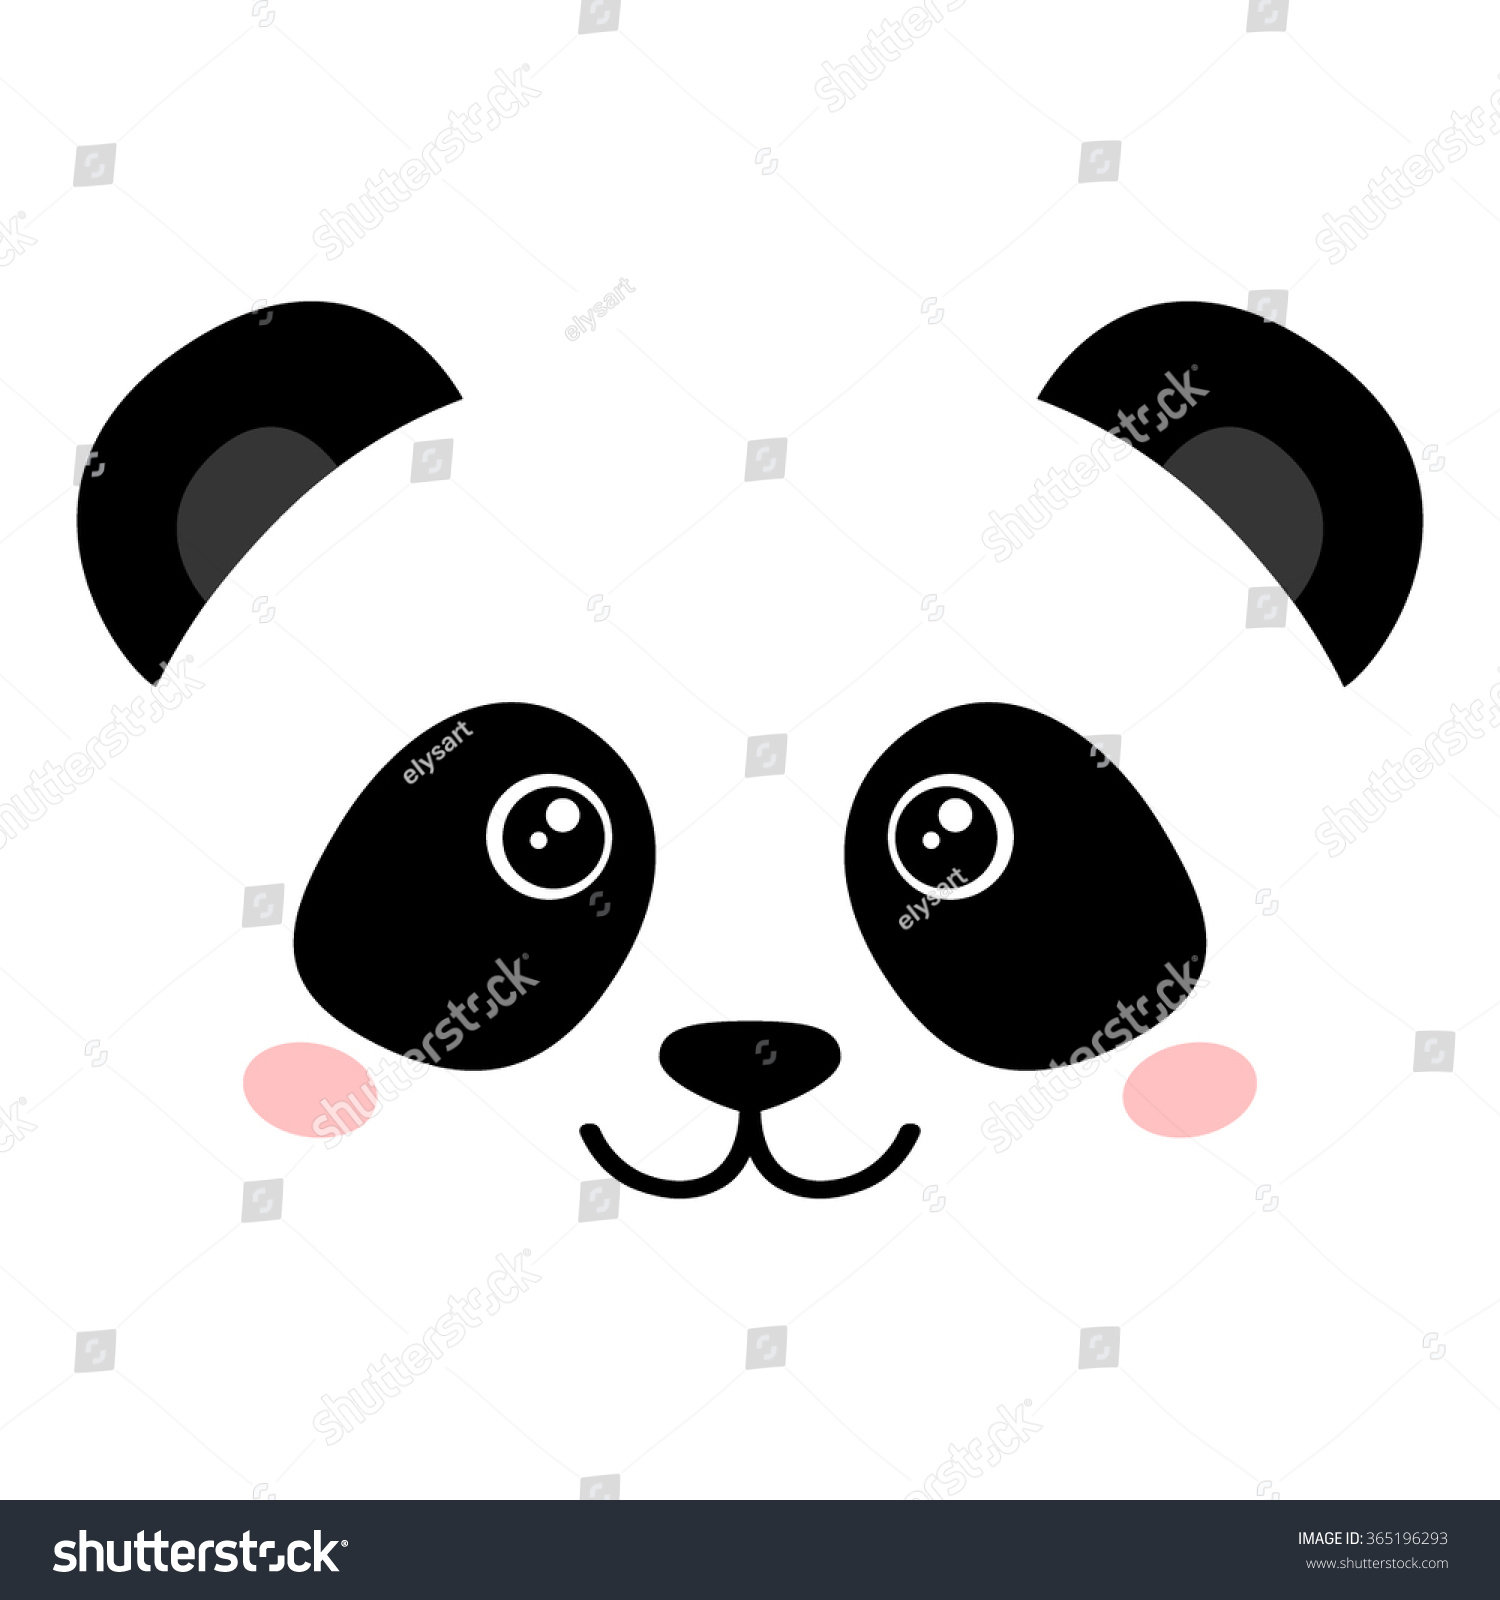 panda face clipart - photo #34